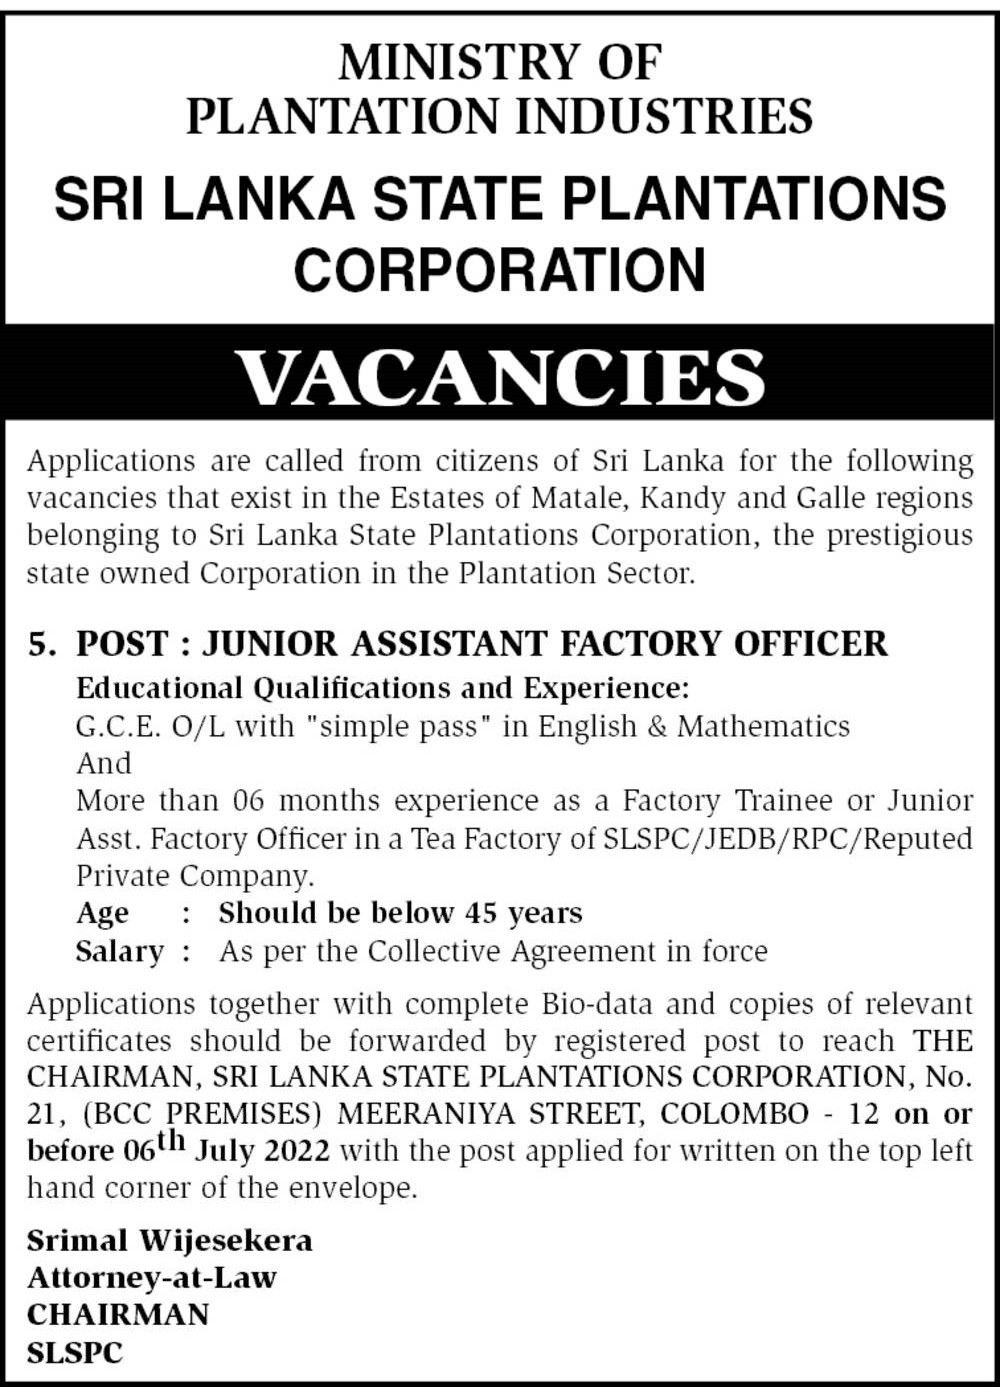 Junior Assistant Factory Officer Vacancy - Sri Lanka State Plantations Corporation Jobs Vacancies